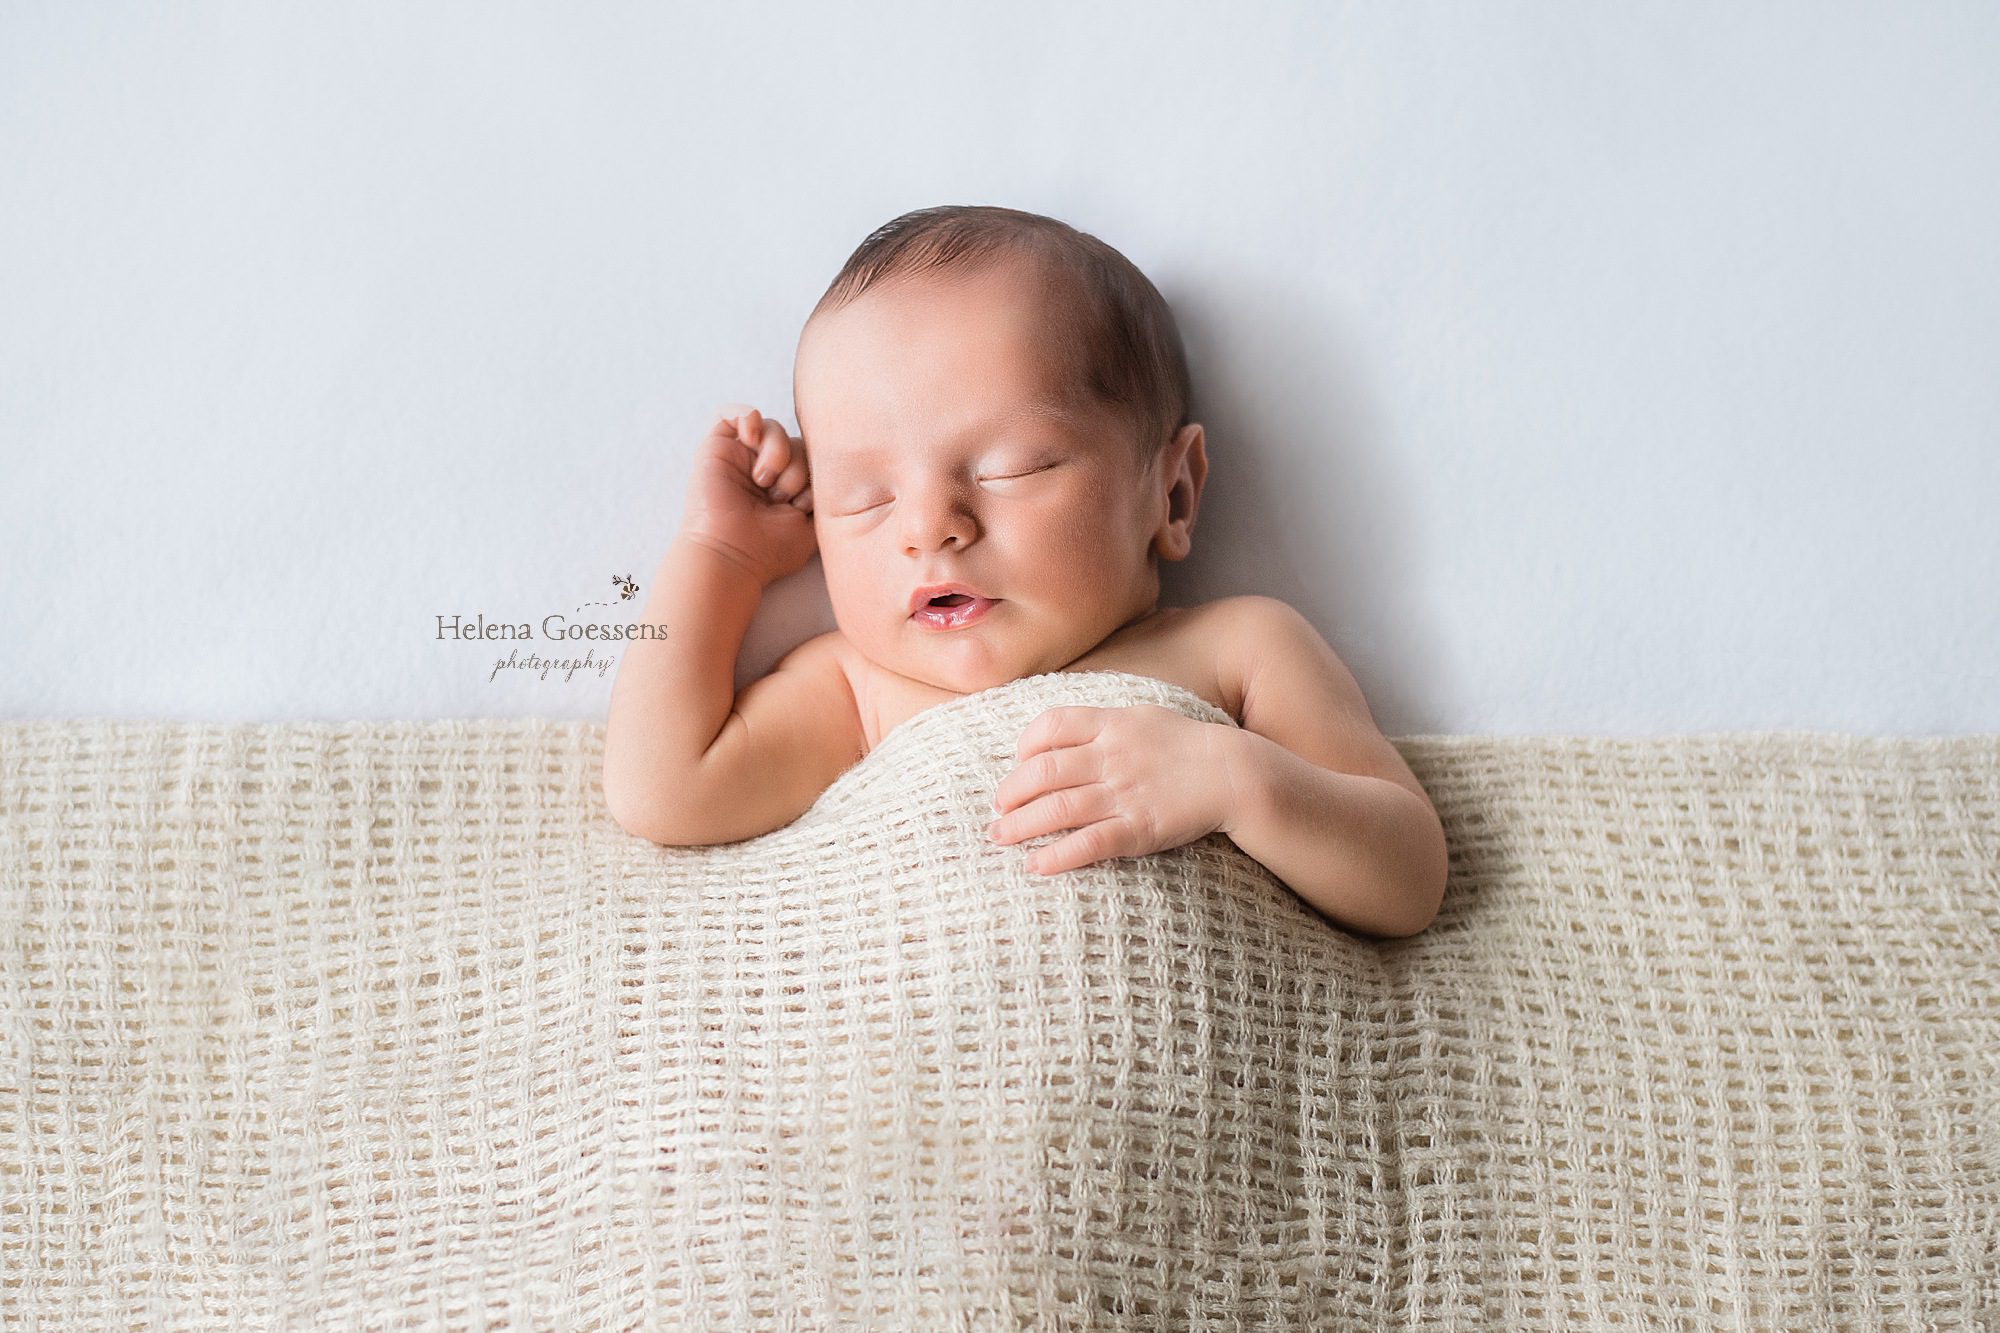 MA newborn session with Helena Goessens Photography